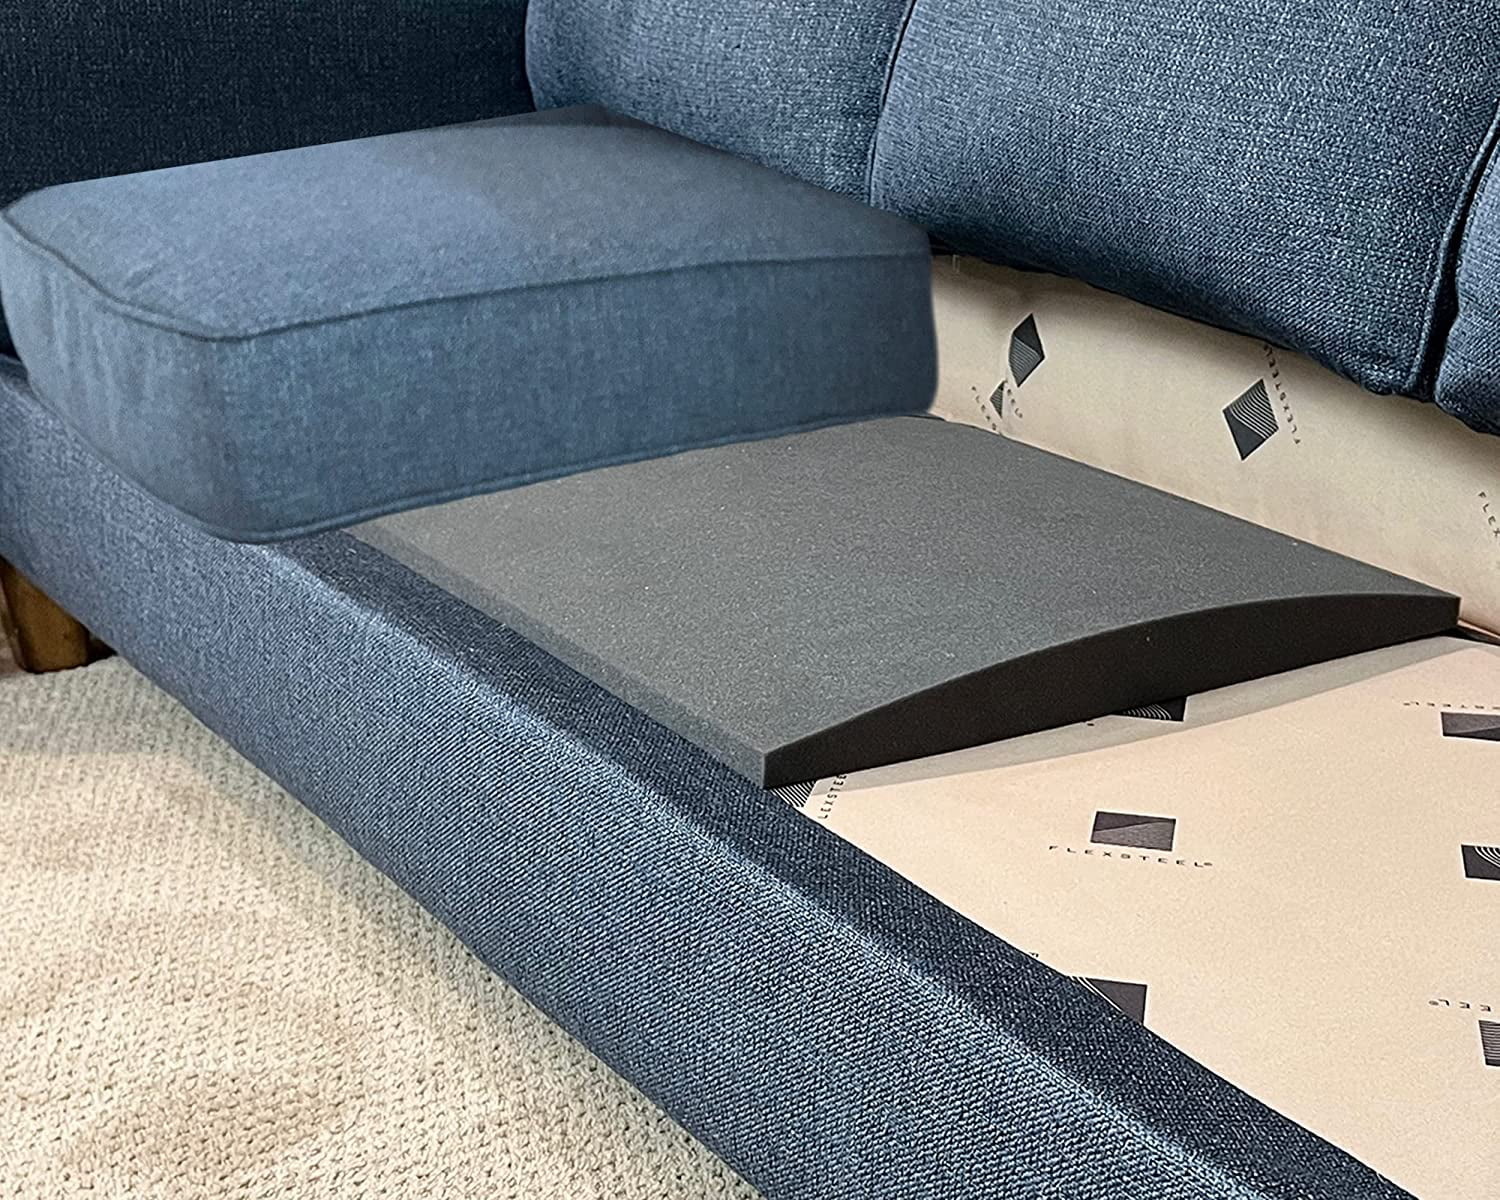 Sag Repair Couch Cushion Support